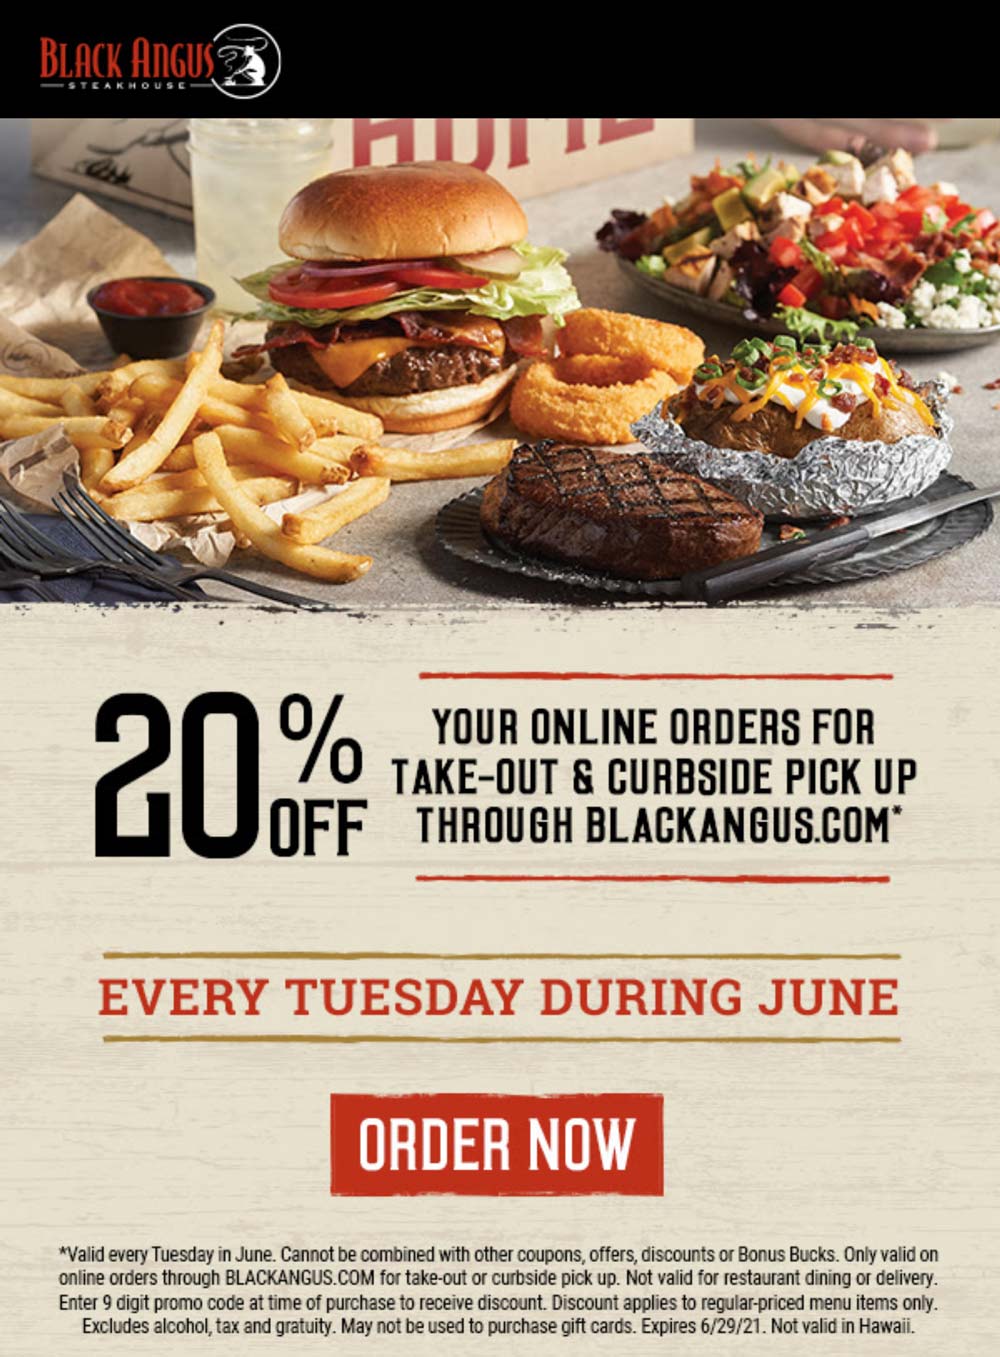 Black Angus restaurants Coupon  20% off takeout Tuesdays at Black Angus steakhouse via promo code 774-304-093 #blackangus 